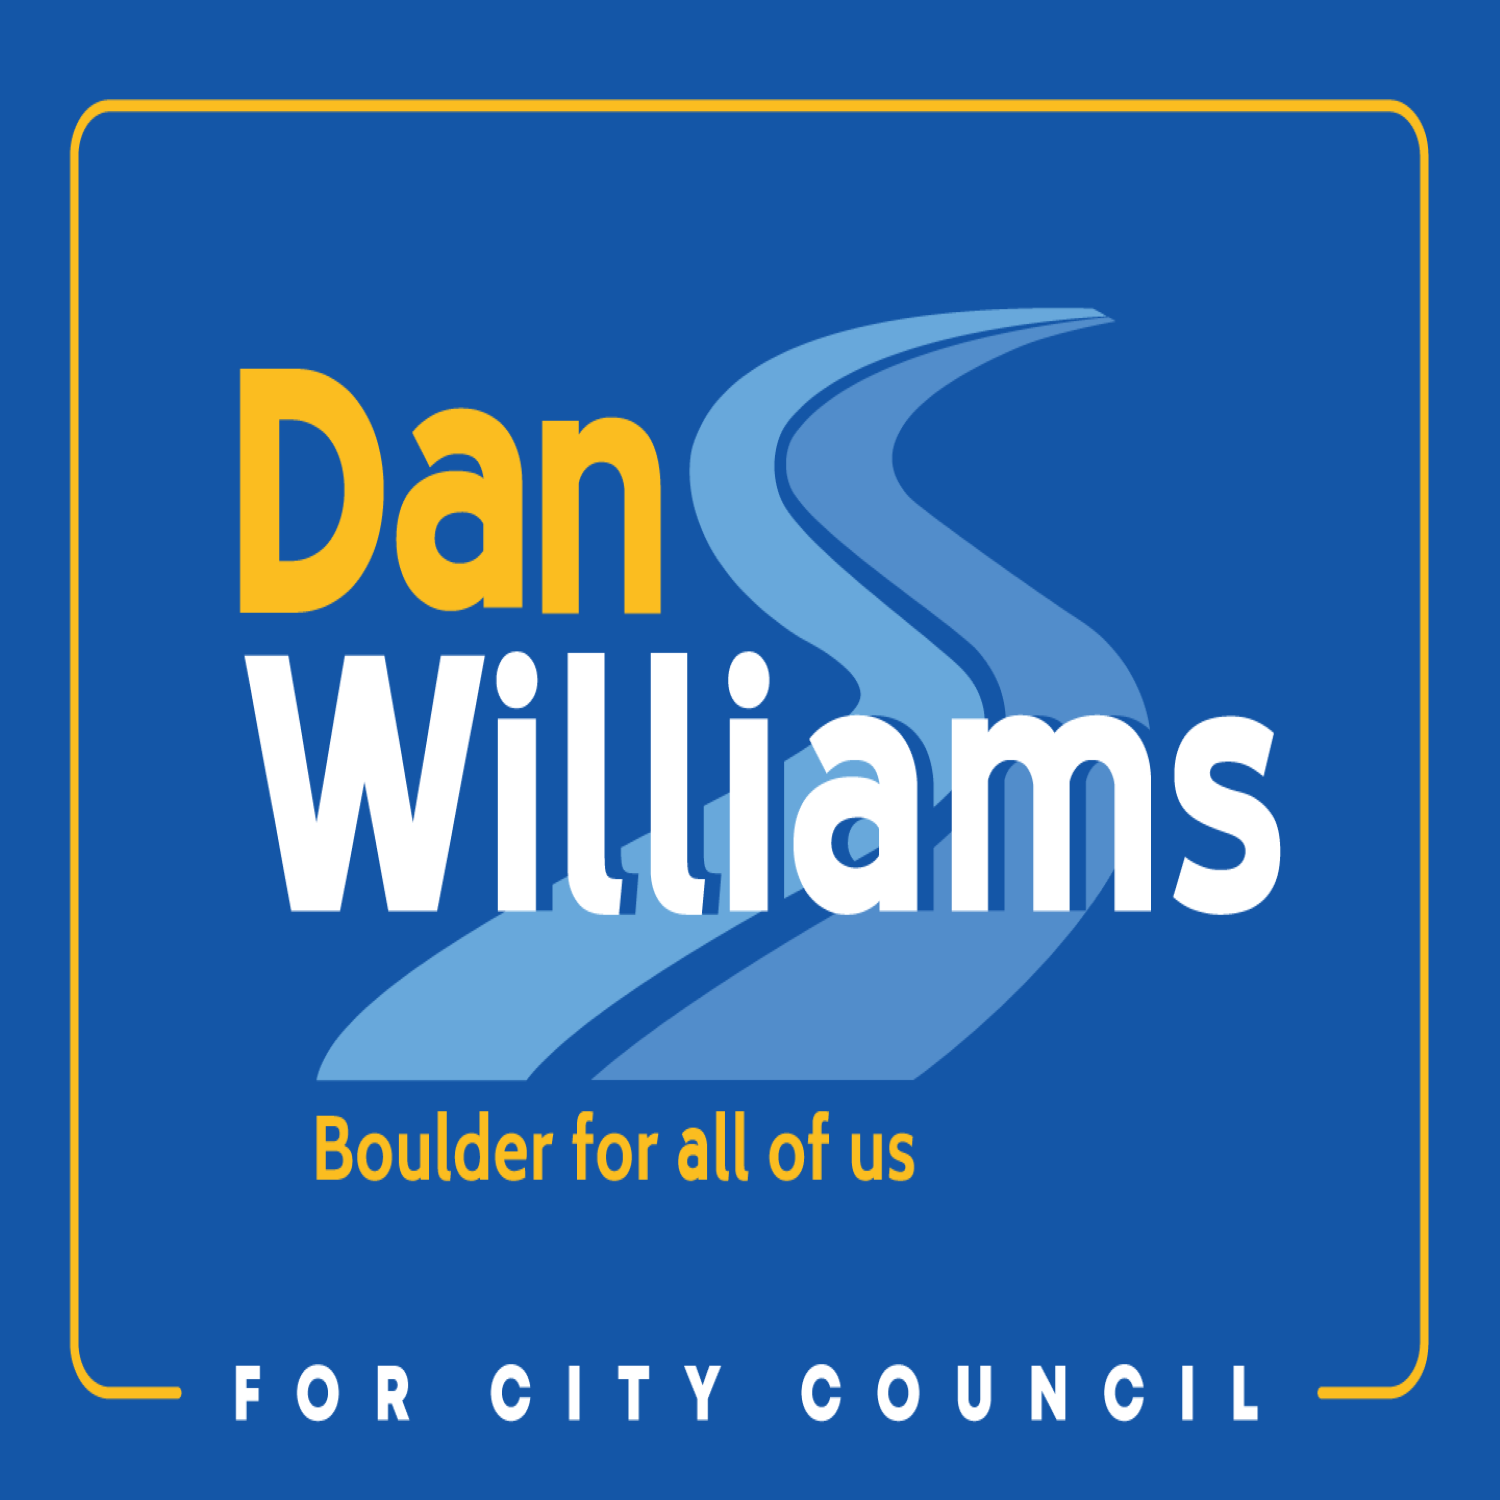 012 Dan Williams, 2021 Boulder City Council Candidate